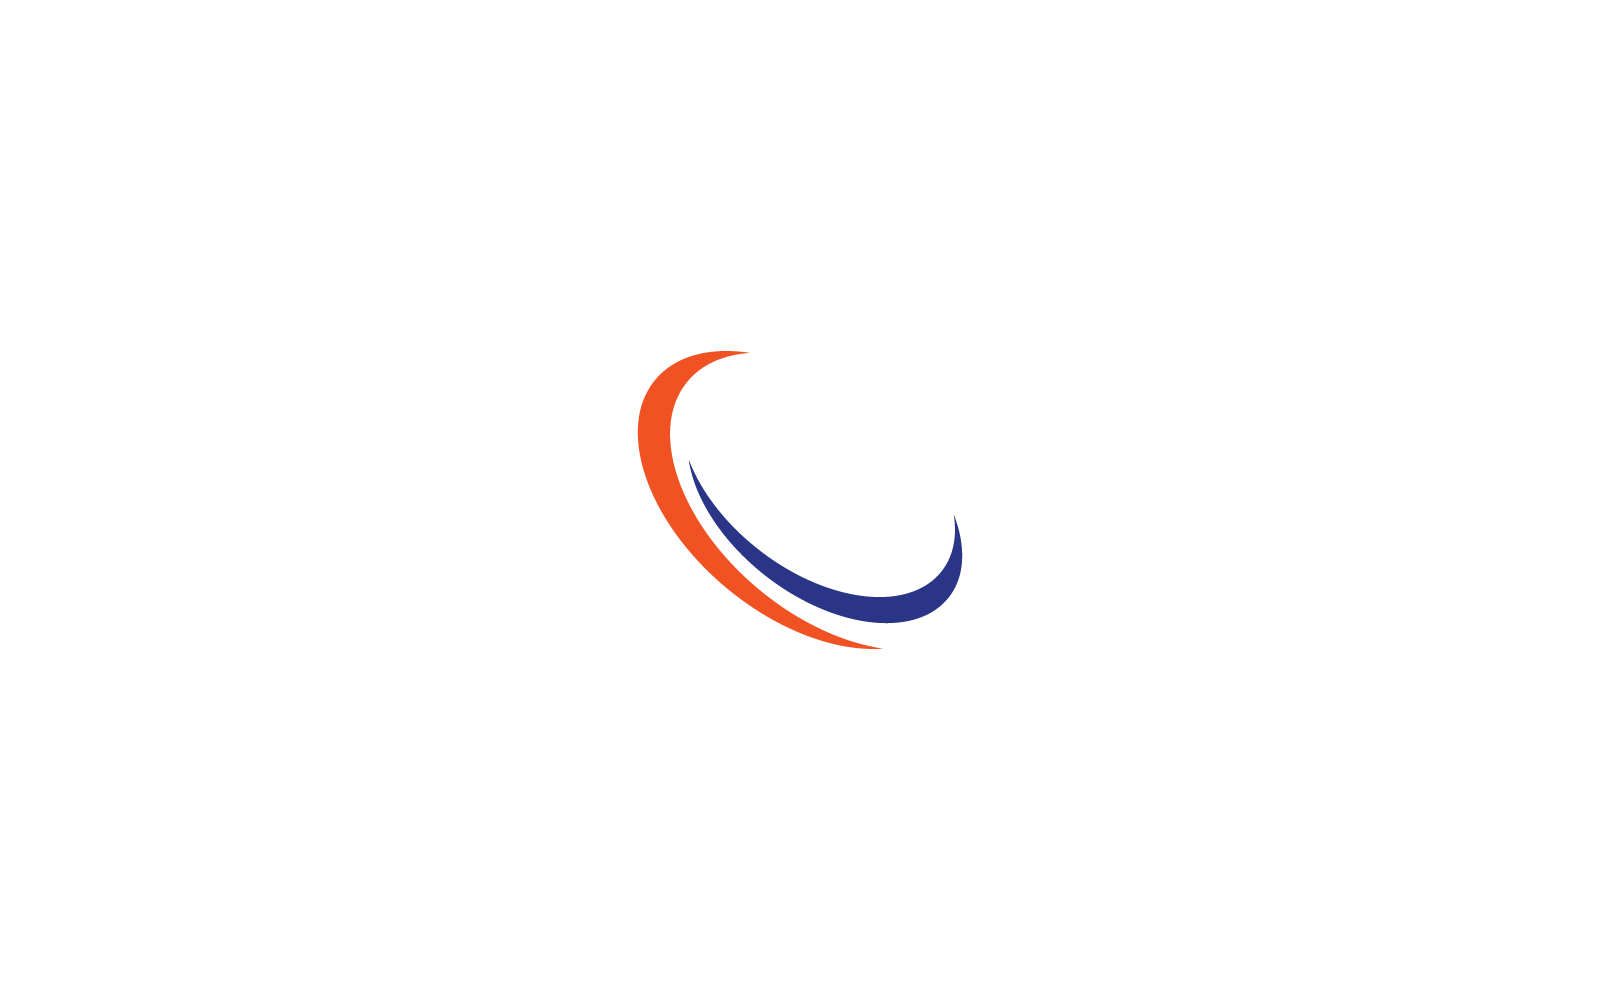 Swoosh logo illustration vector icon template